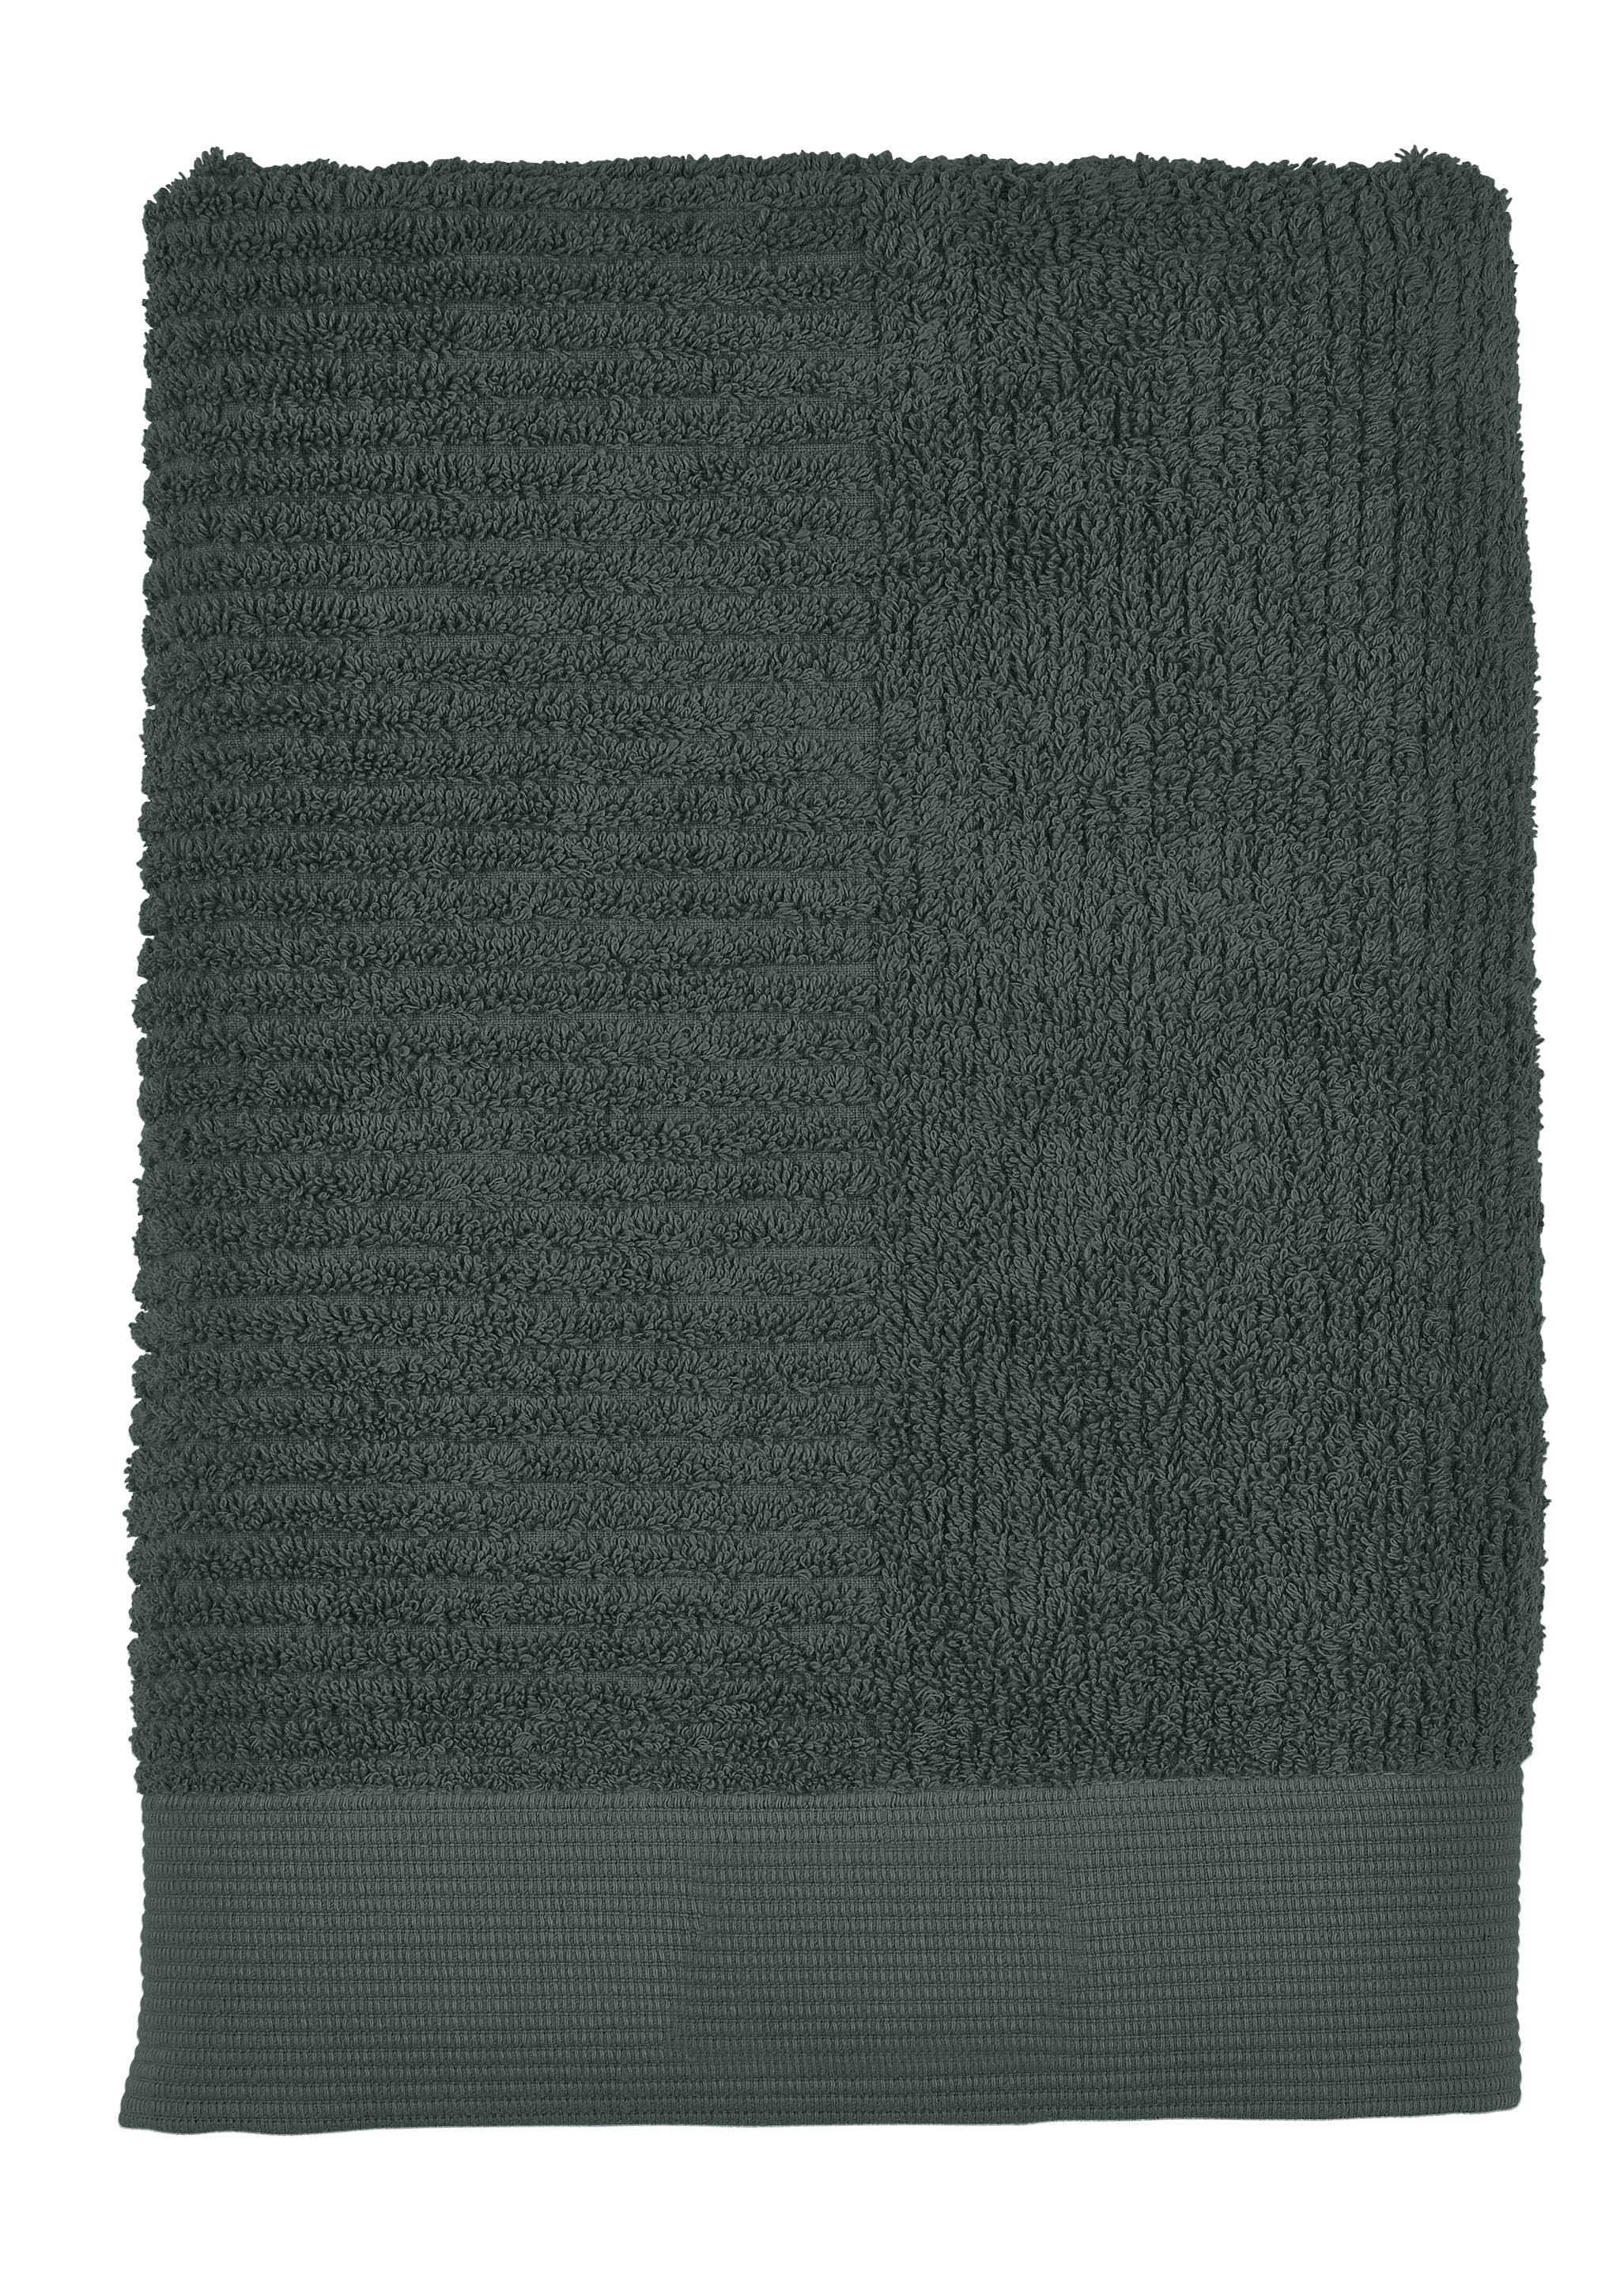 Zone - Classic Towel 70 x 140 cm - Pine Green (372105)